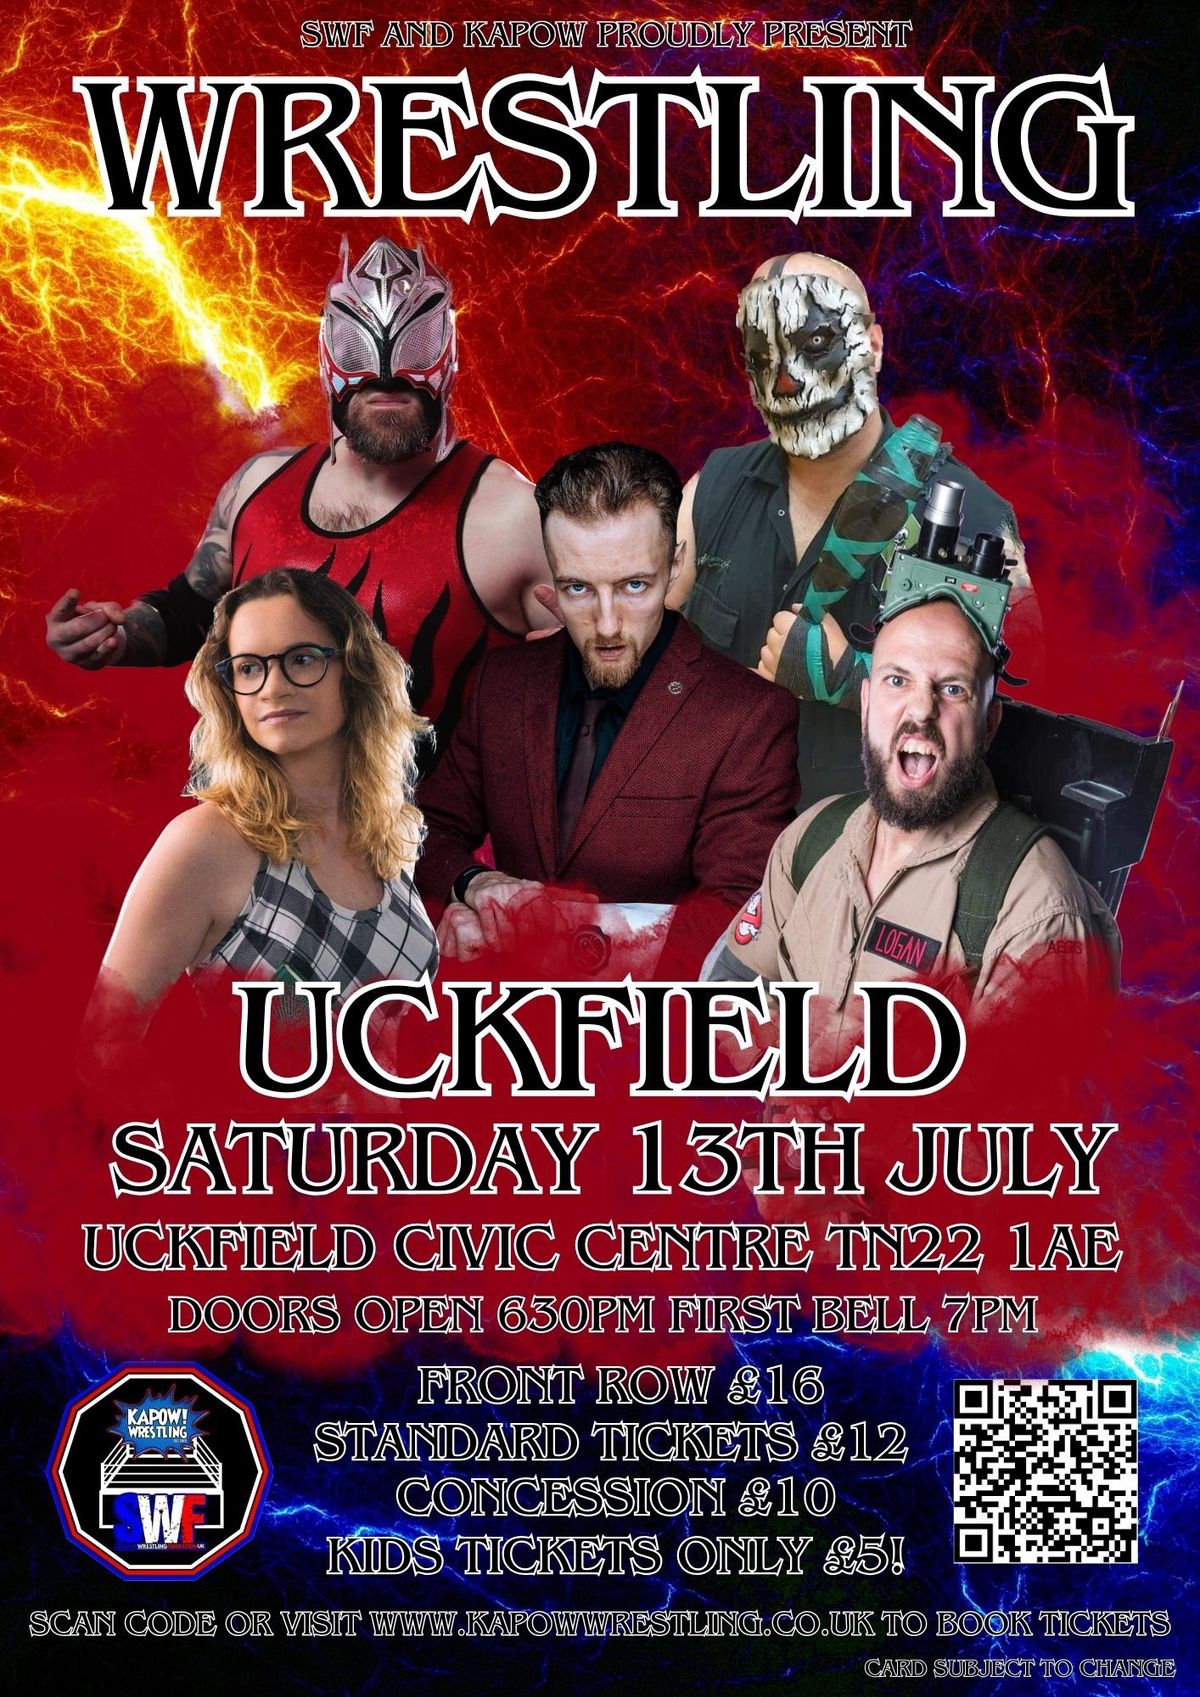 Live Wrestling back in Uckfield 